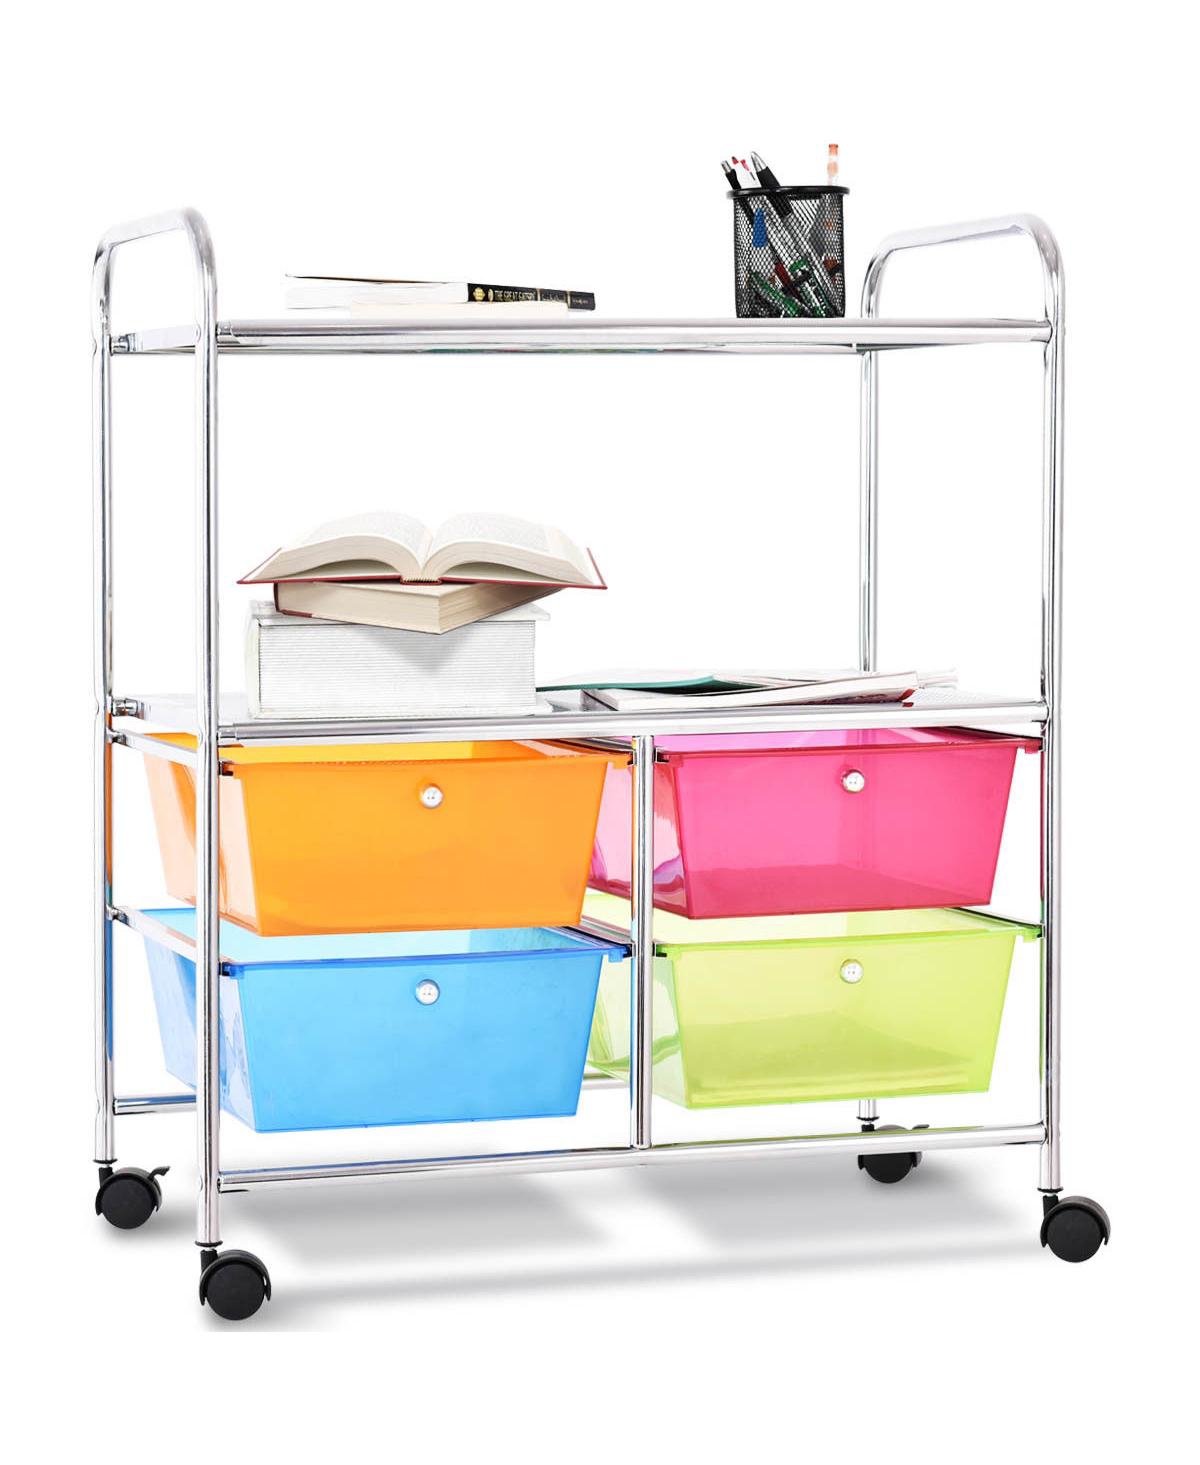 4 Multifunctional Drawers Rolling Storage Cart Rack Shelves Shelf Home Office - Silver